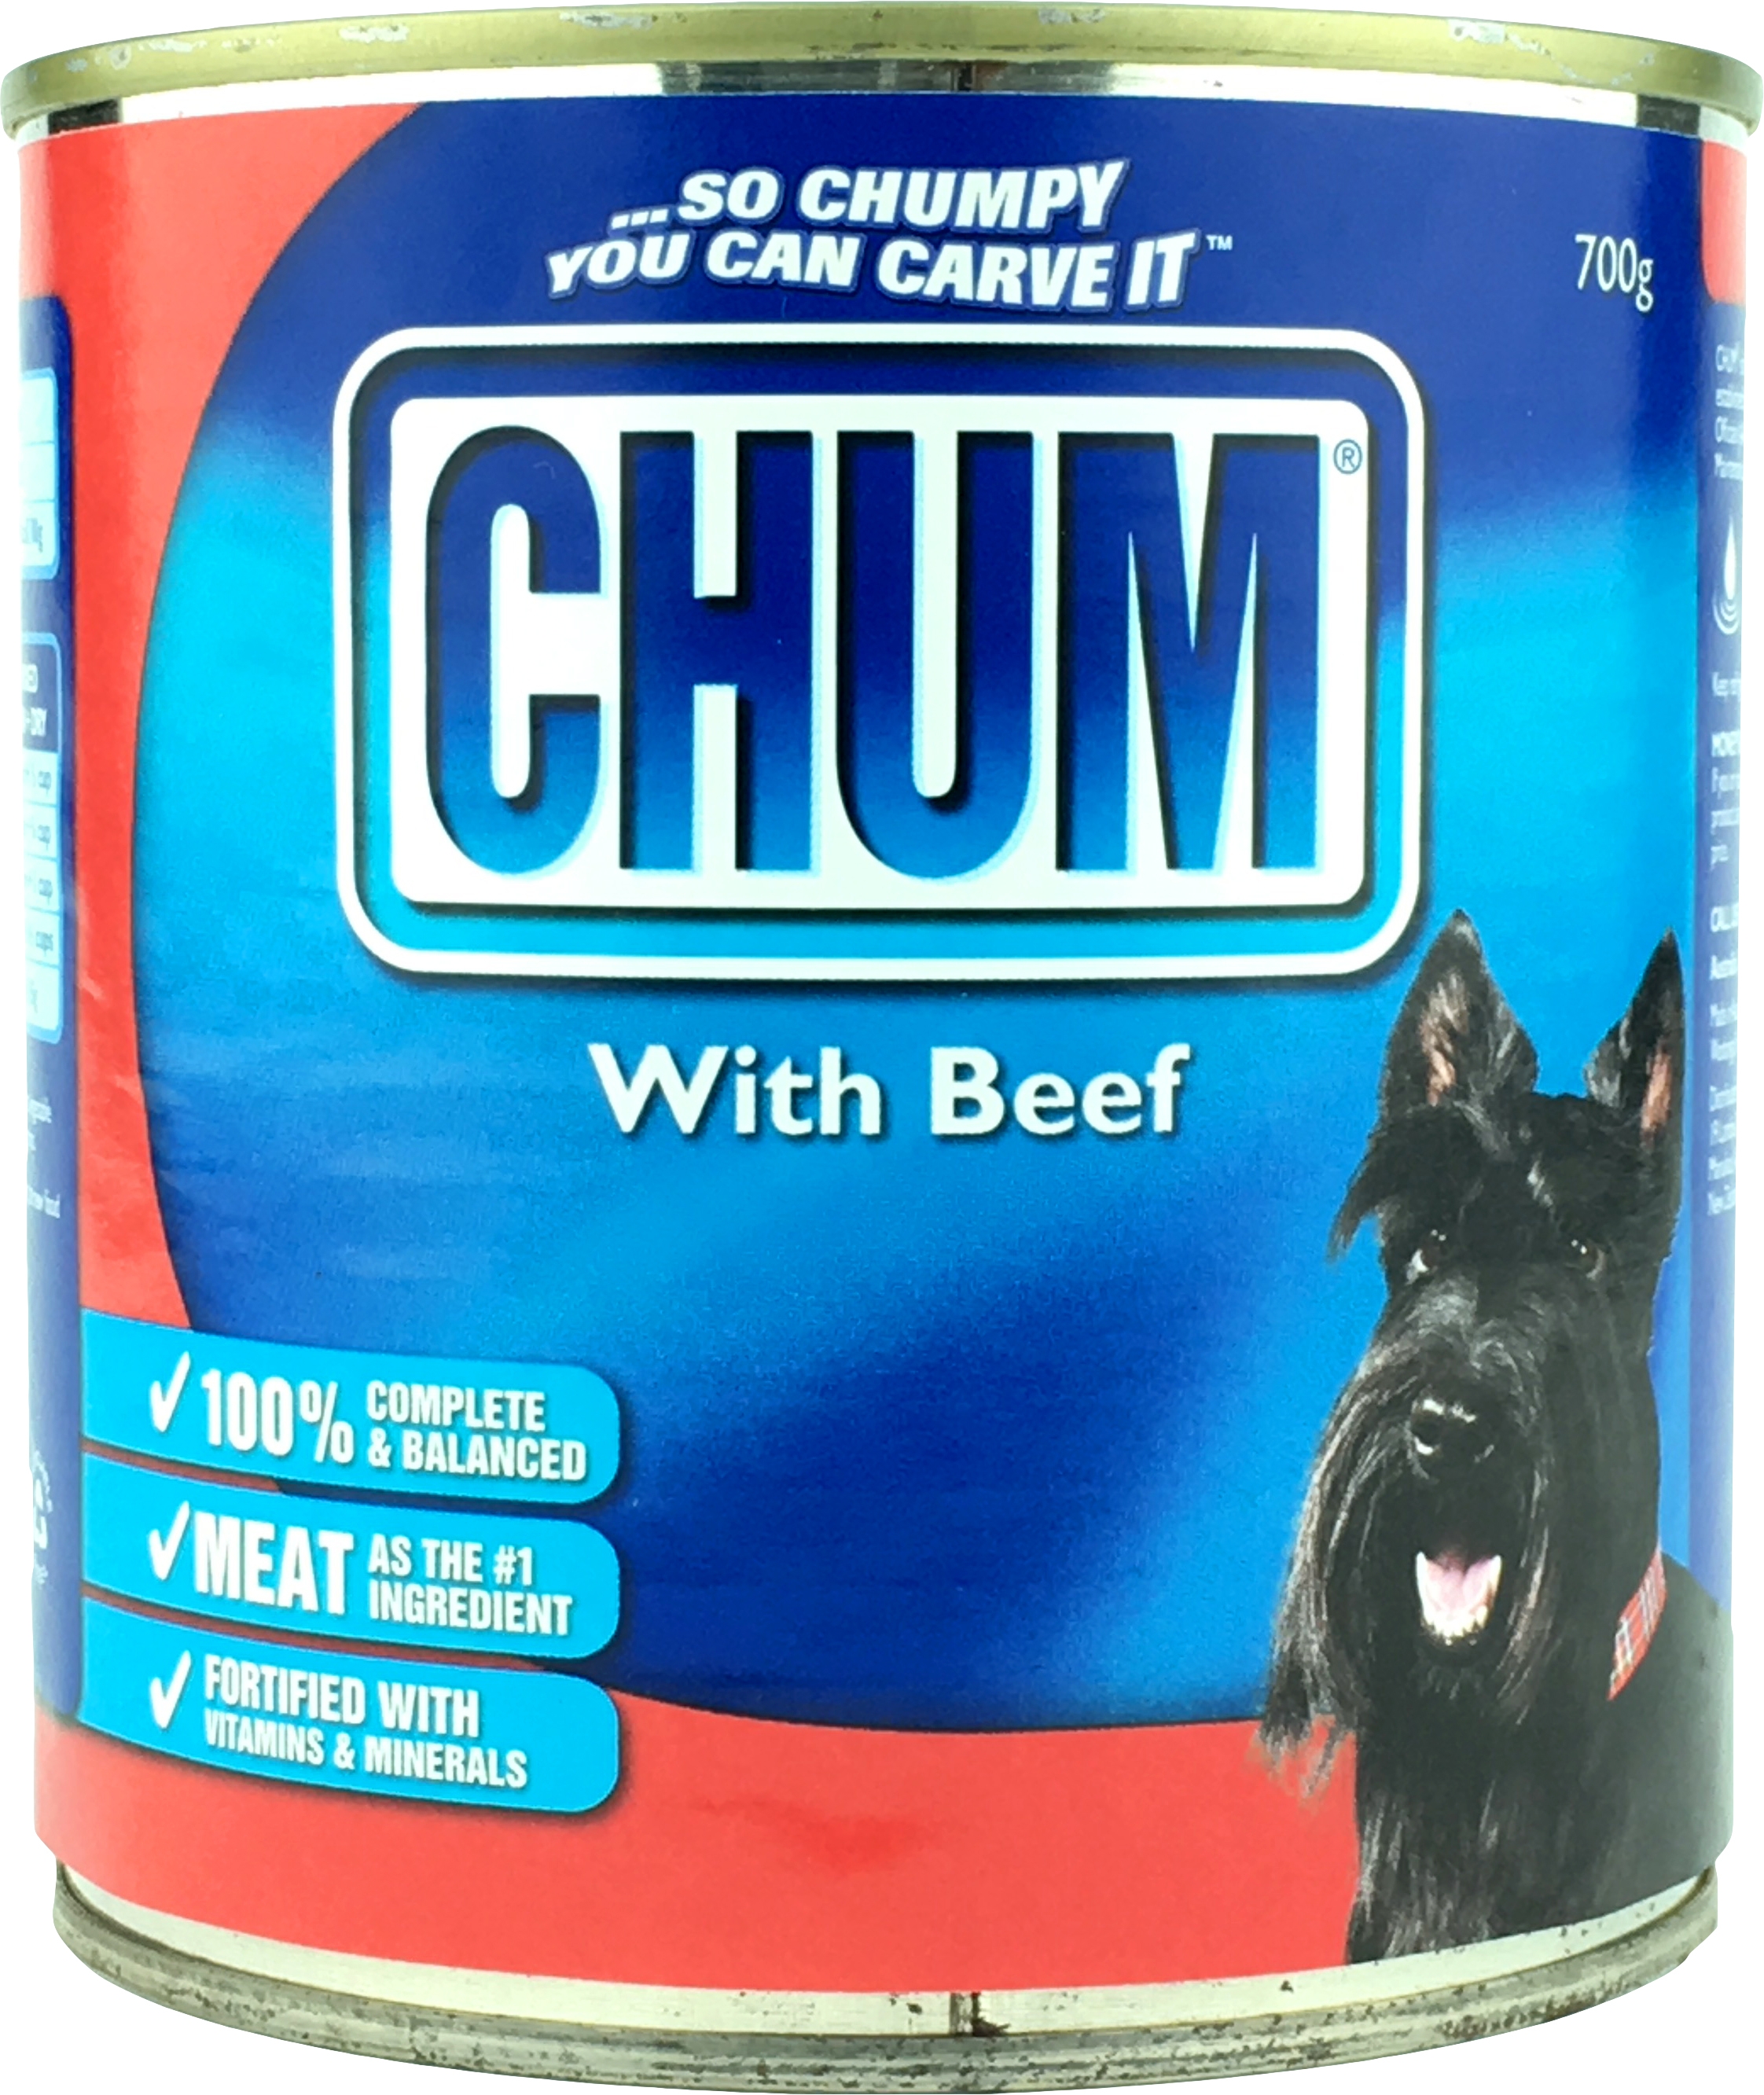 Chum Beef Canned Dog Food 700g